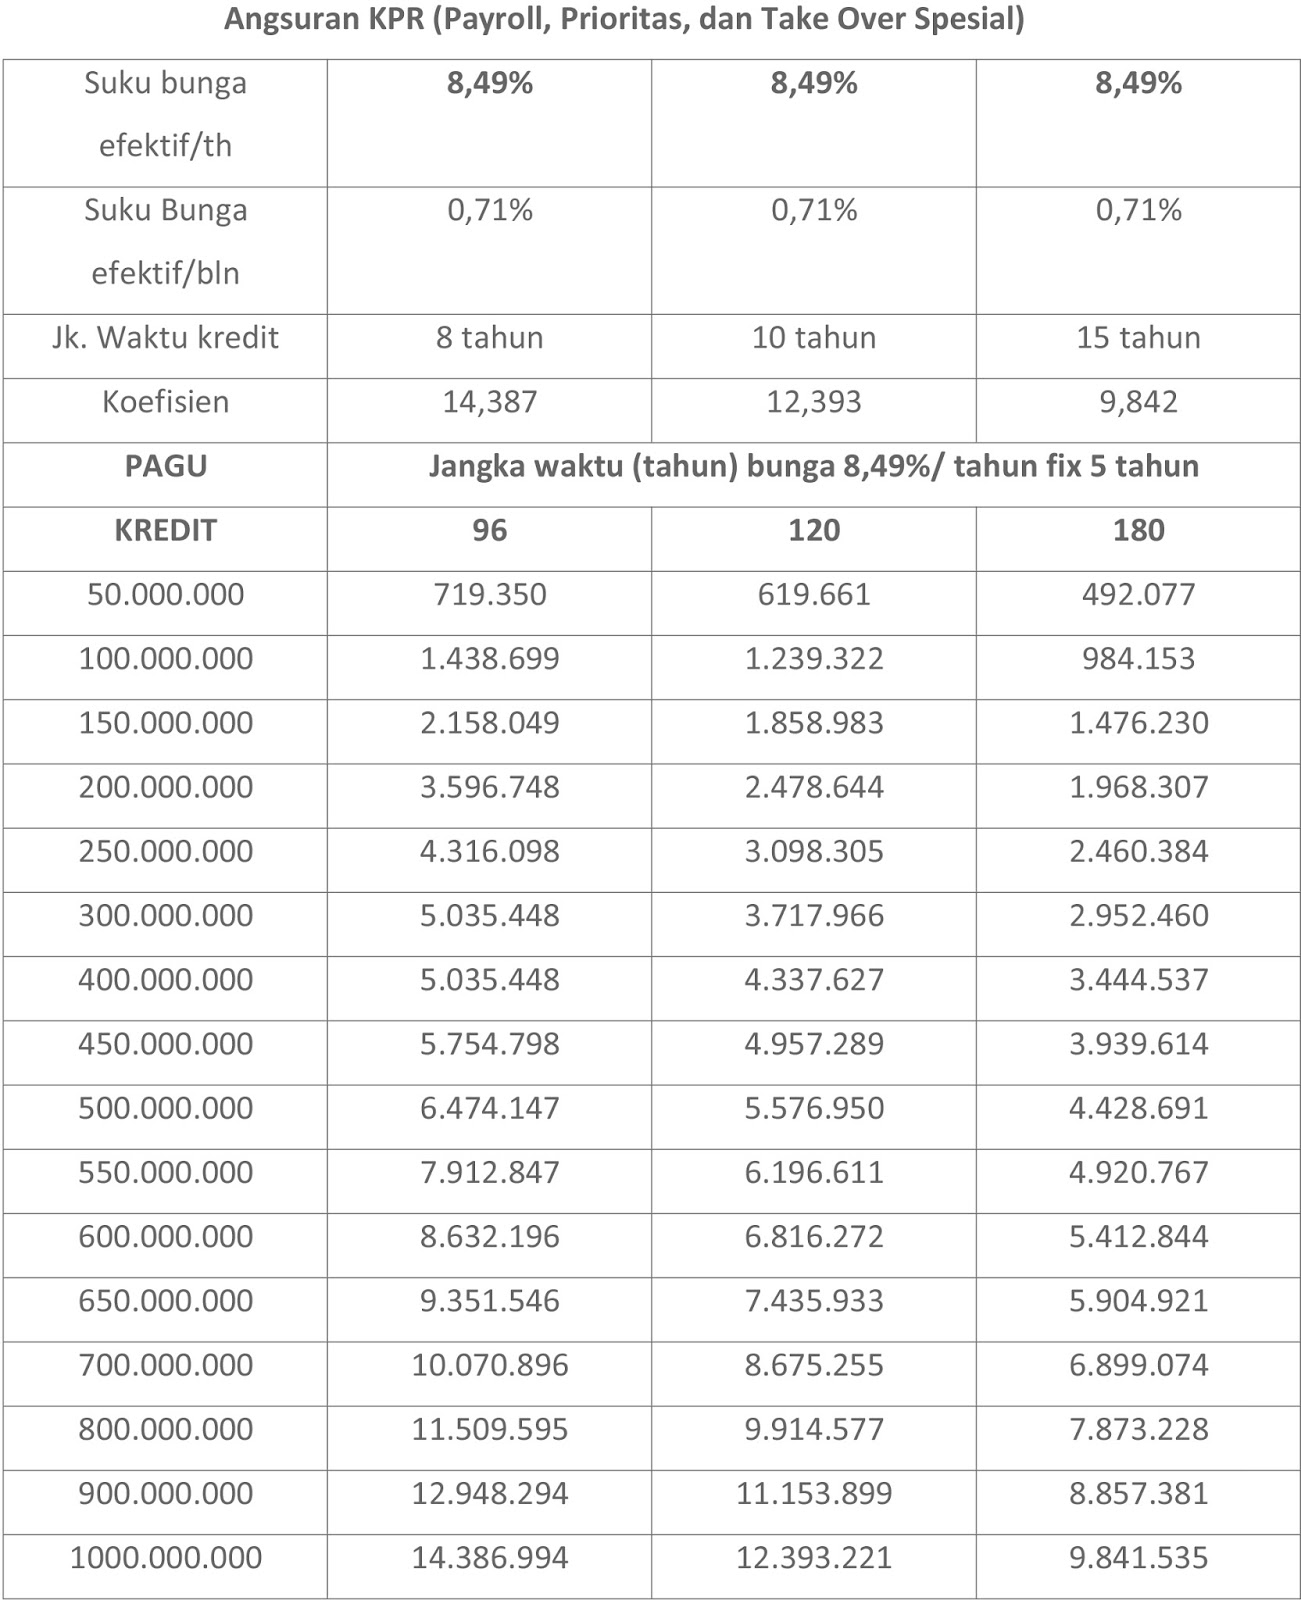 Tabel Angsuran Kpr Bank Jateng 2018 Info Angsuran Kredit Bank